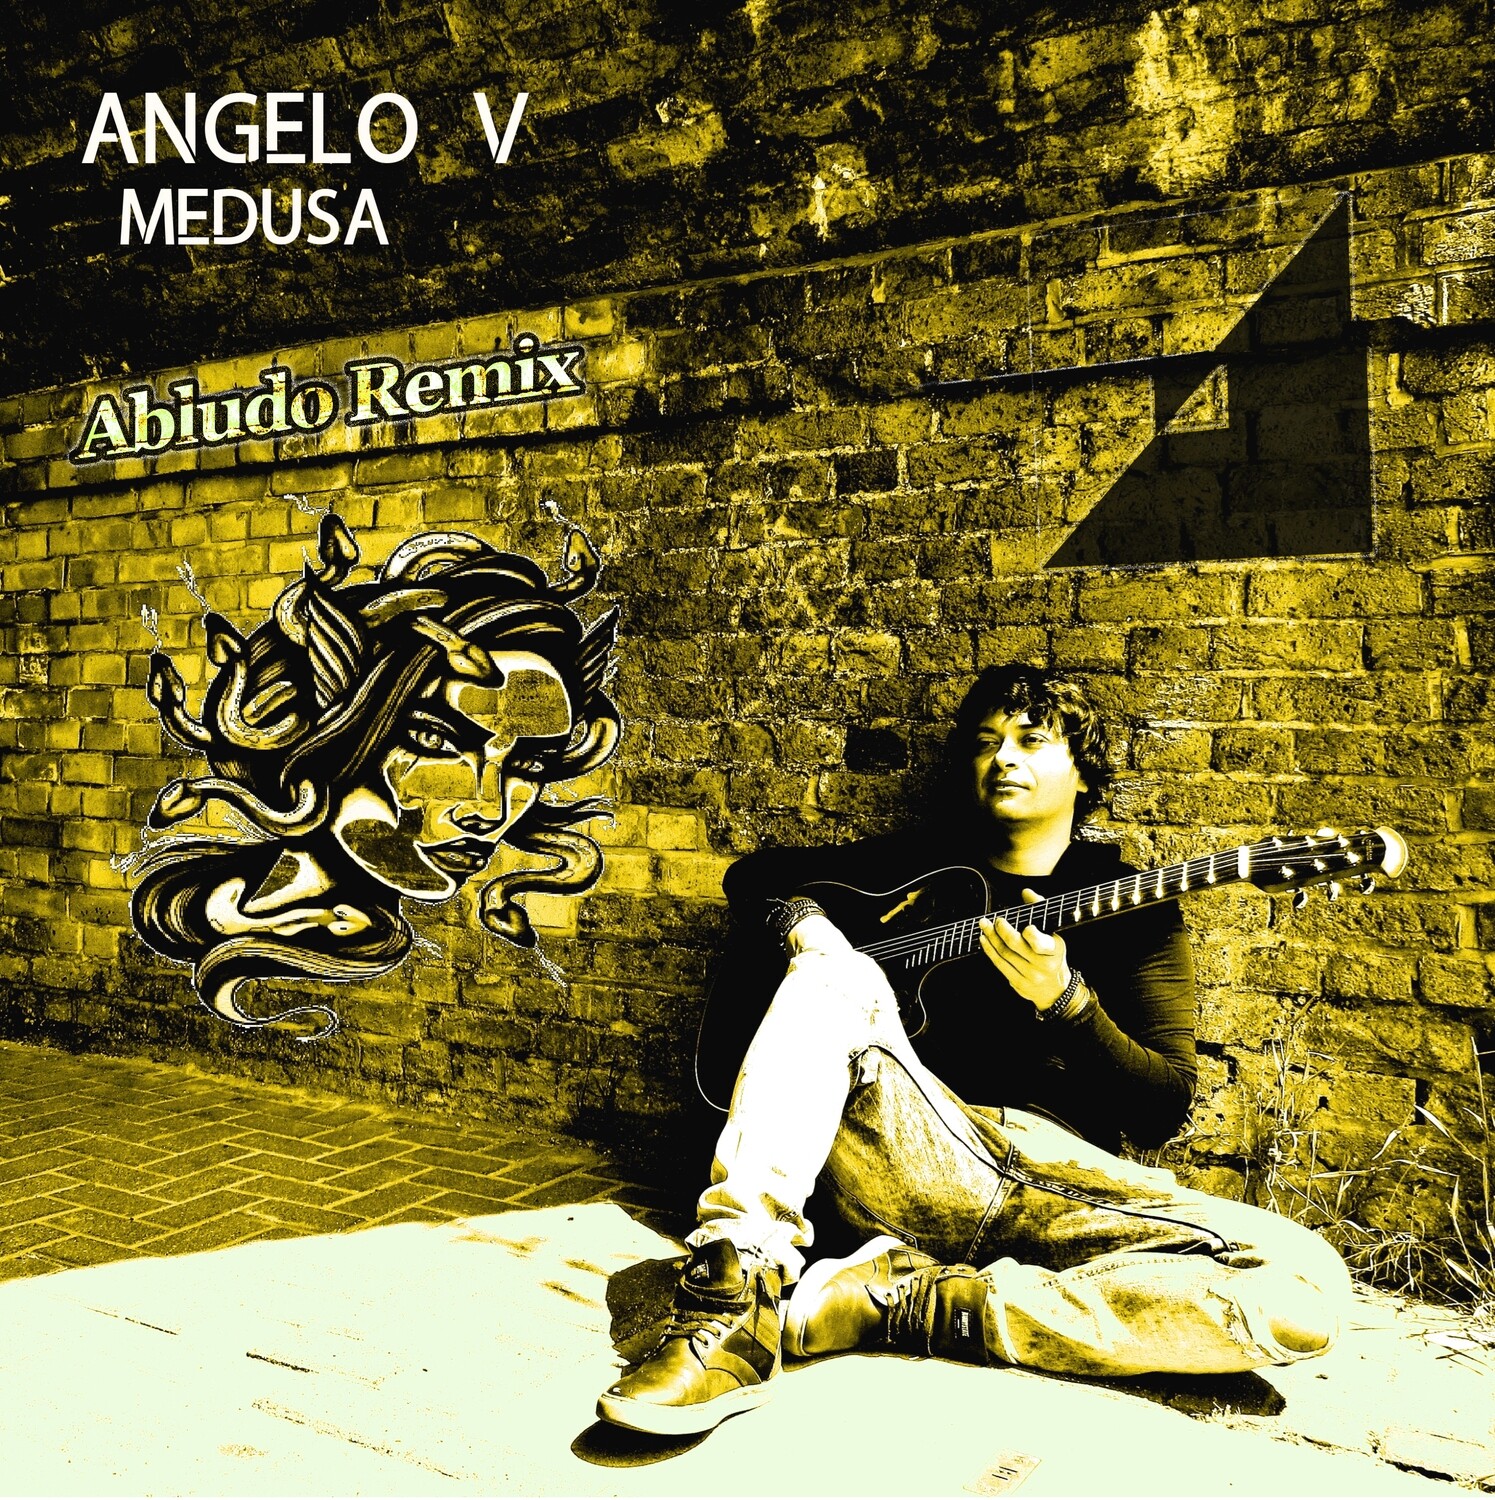 Angelo V - Medusa (ABLUDO REMIX) MP3